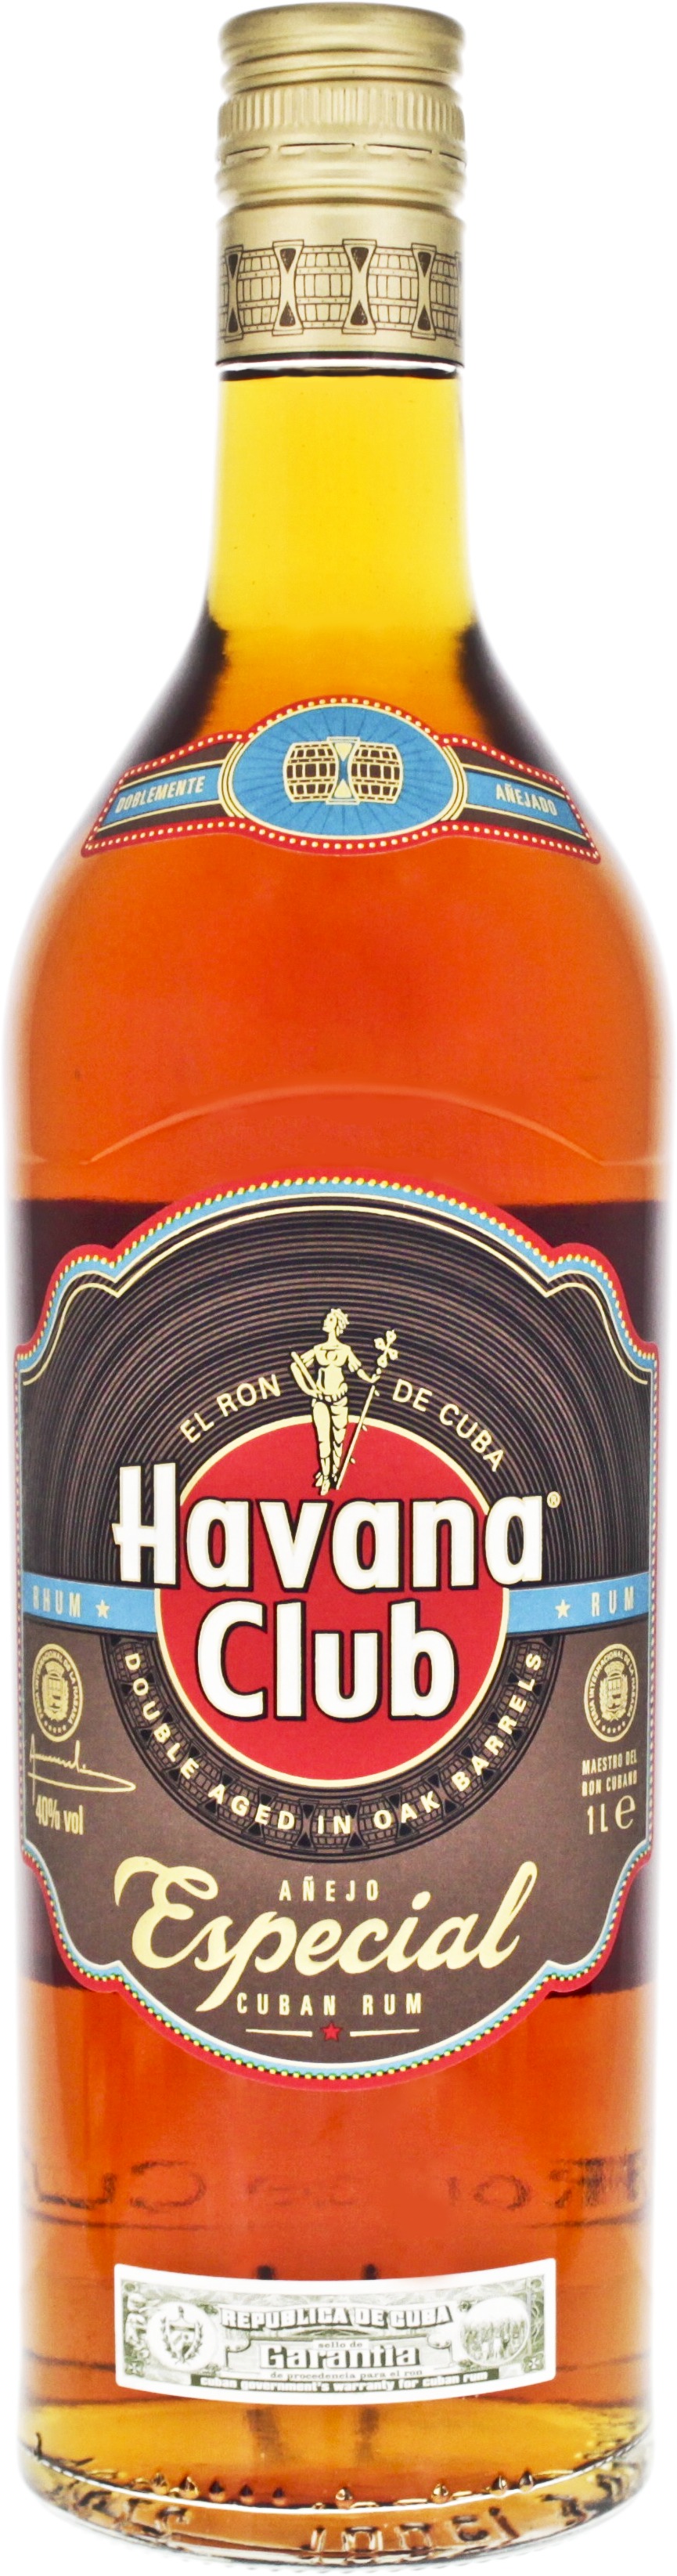 Havana Club Anejo Especial bordershop in 40% 1L Tysa at Rum duty-free Cuban Chop